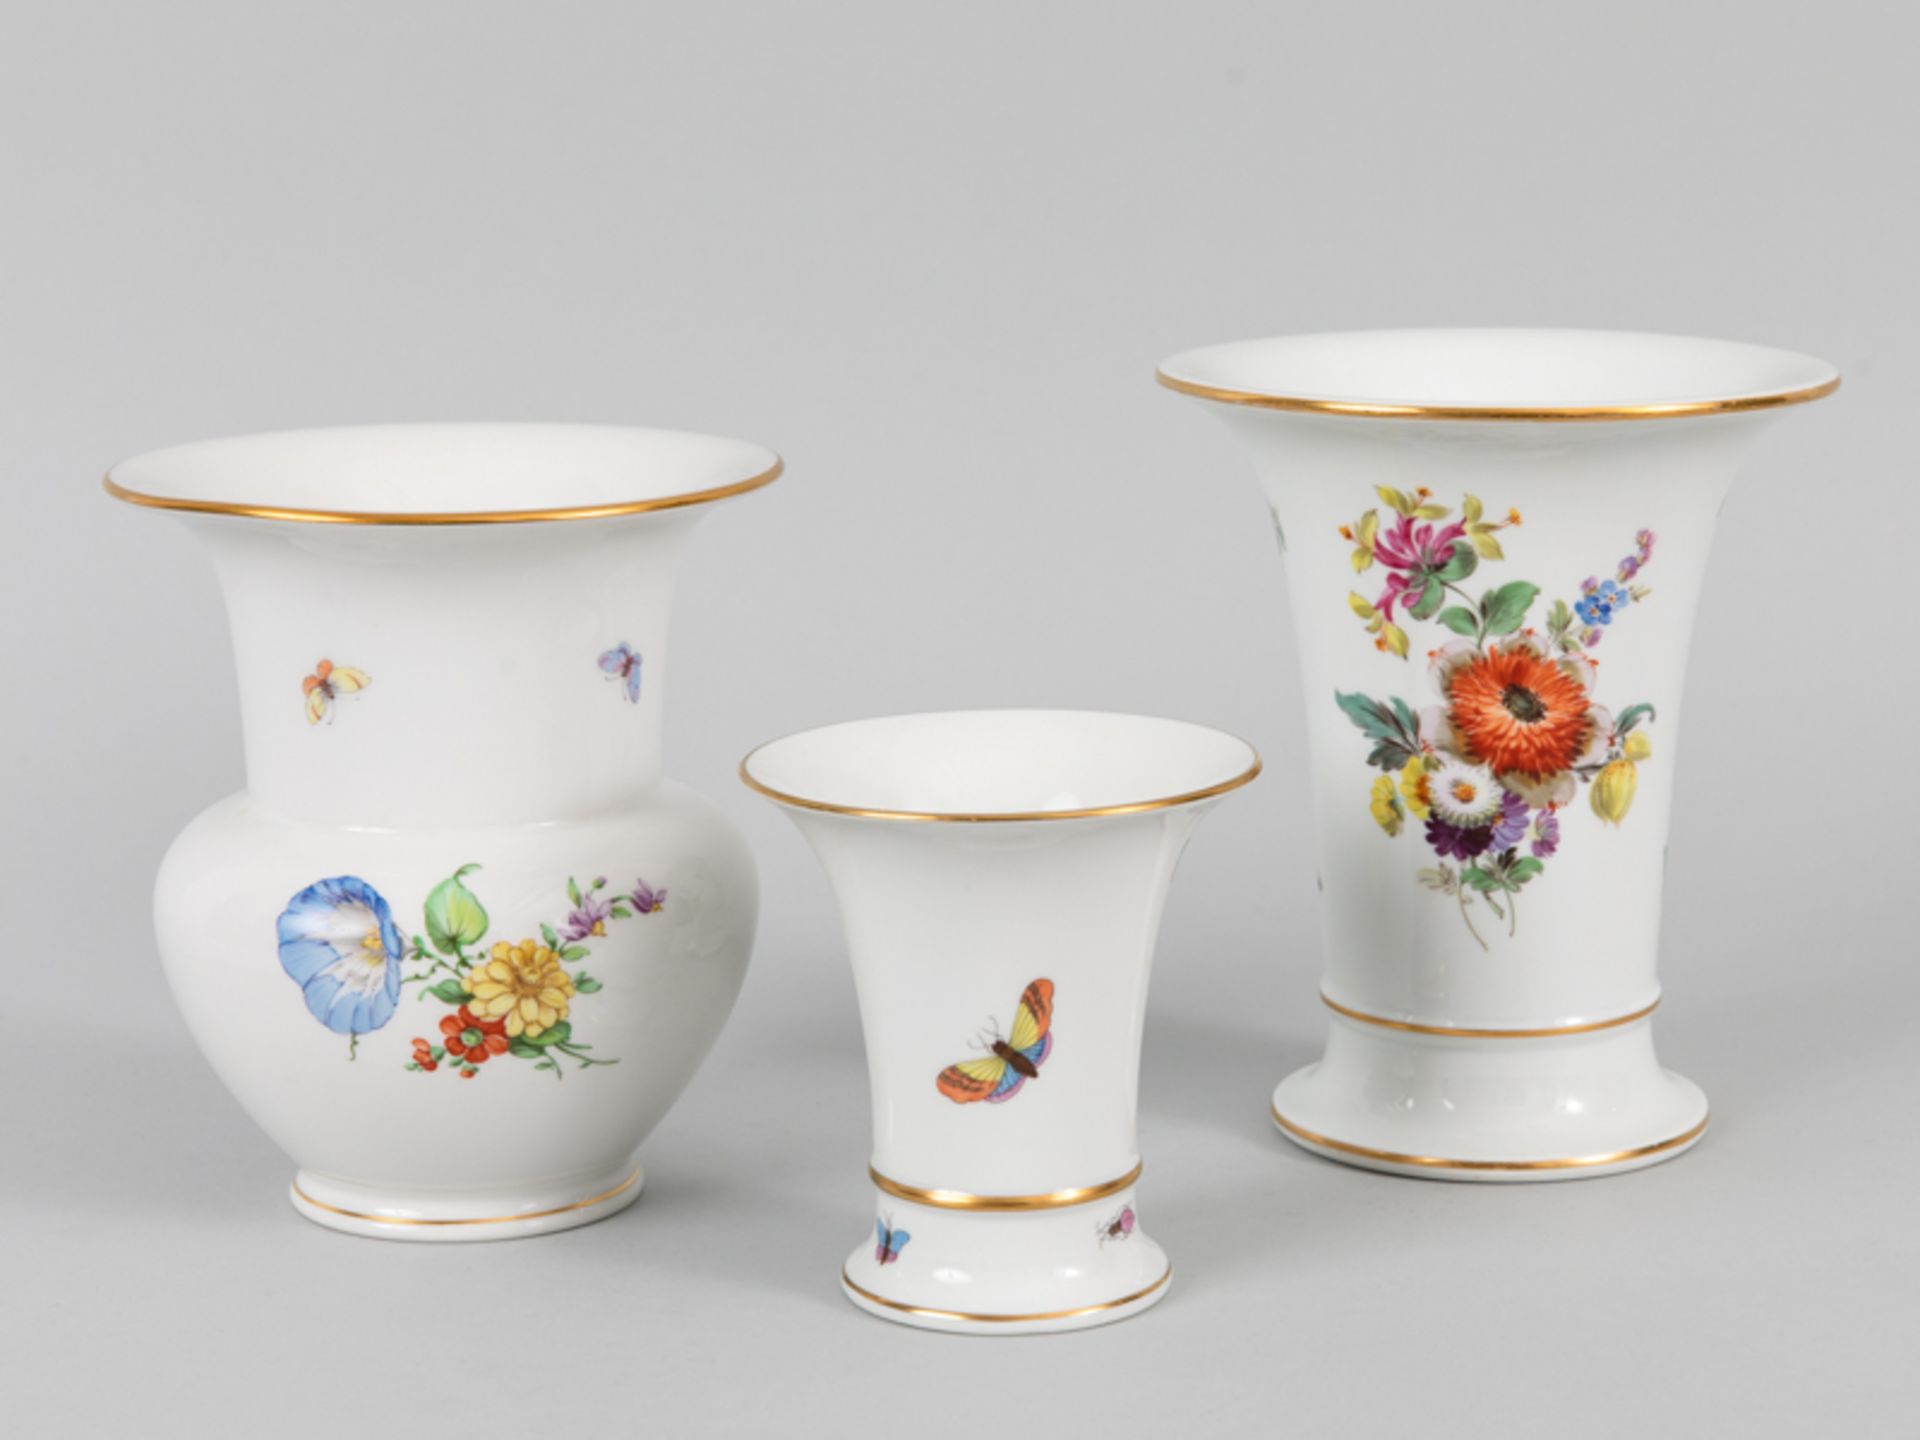 3 Vasen mit Blumenmalerei, Meissen, Herend, KPM Berlin, Ausführung 20. Jh. - Image 3 of 4